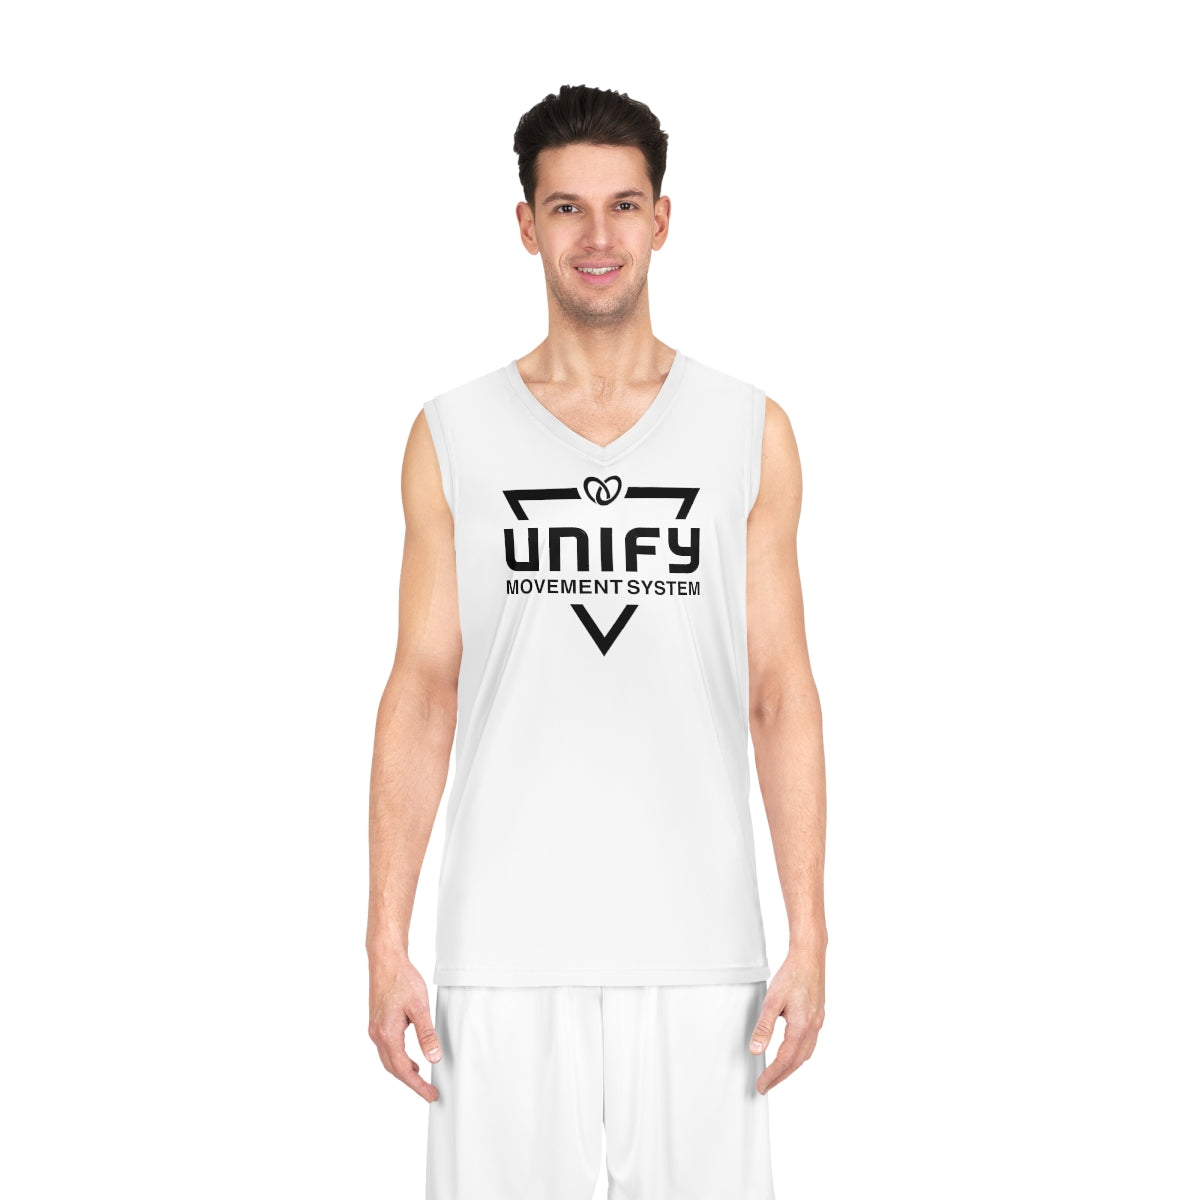 Unify Basketball Jersey - White/Black